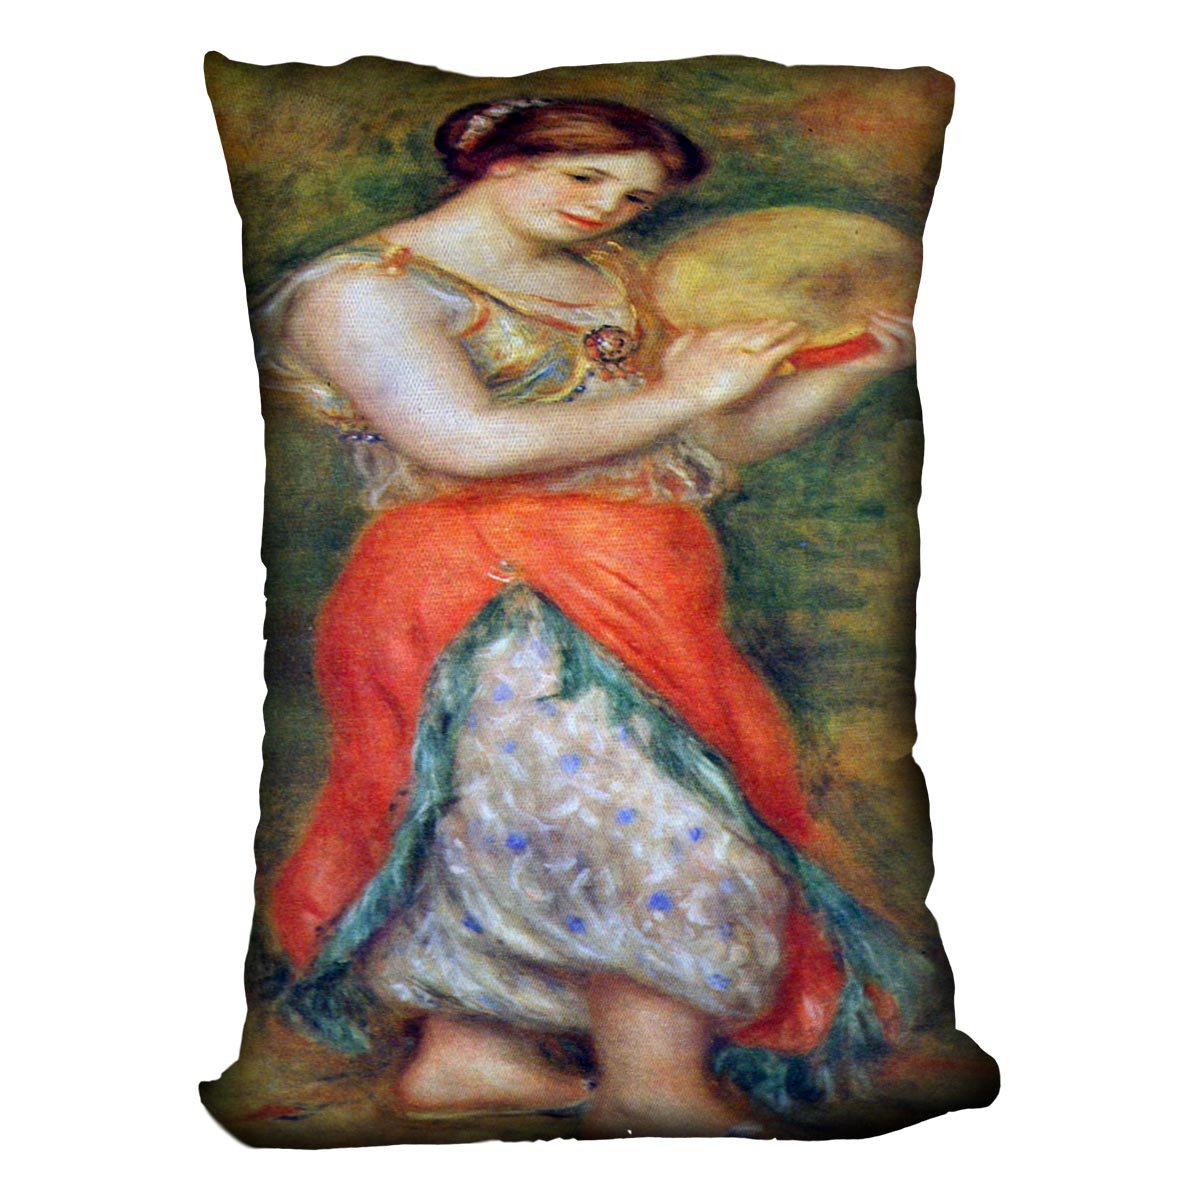 Dancer with tamborine by Renoir Cushion